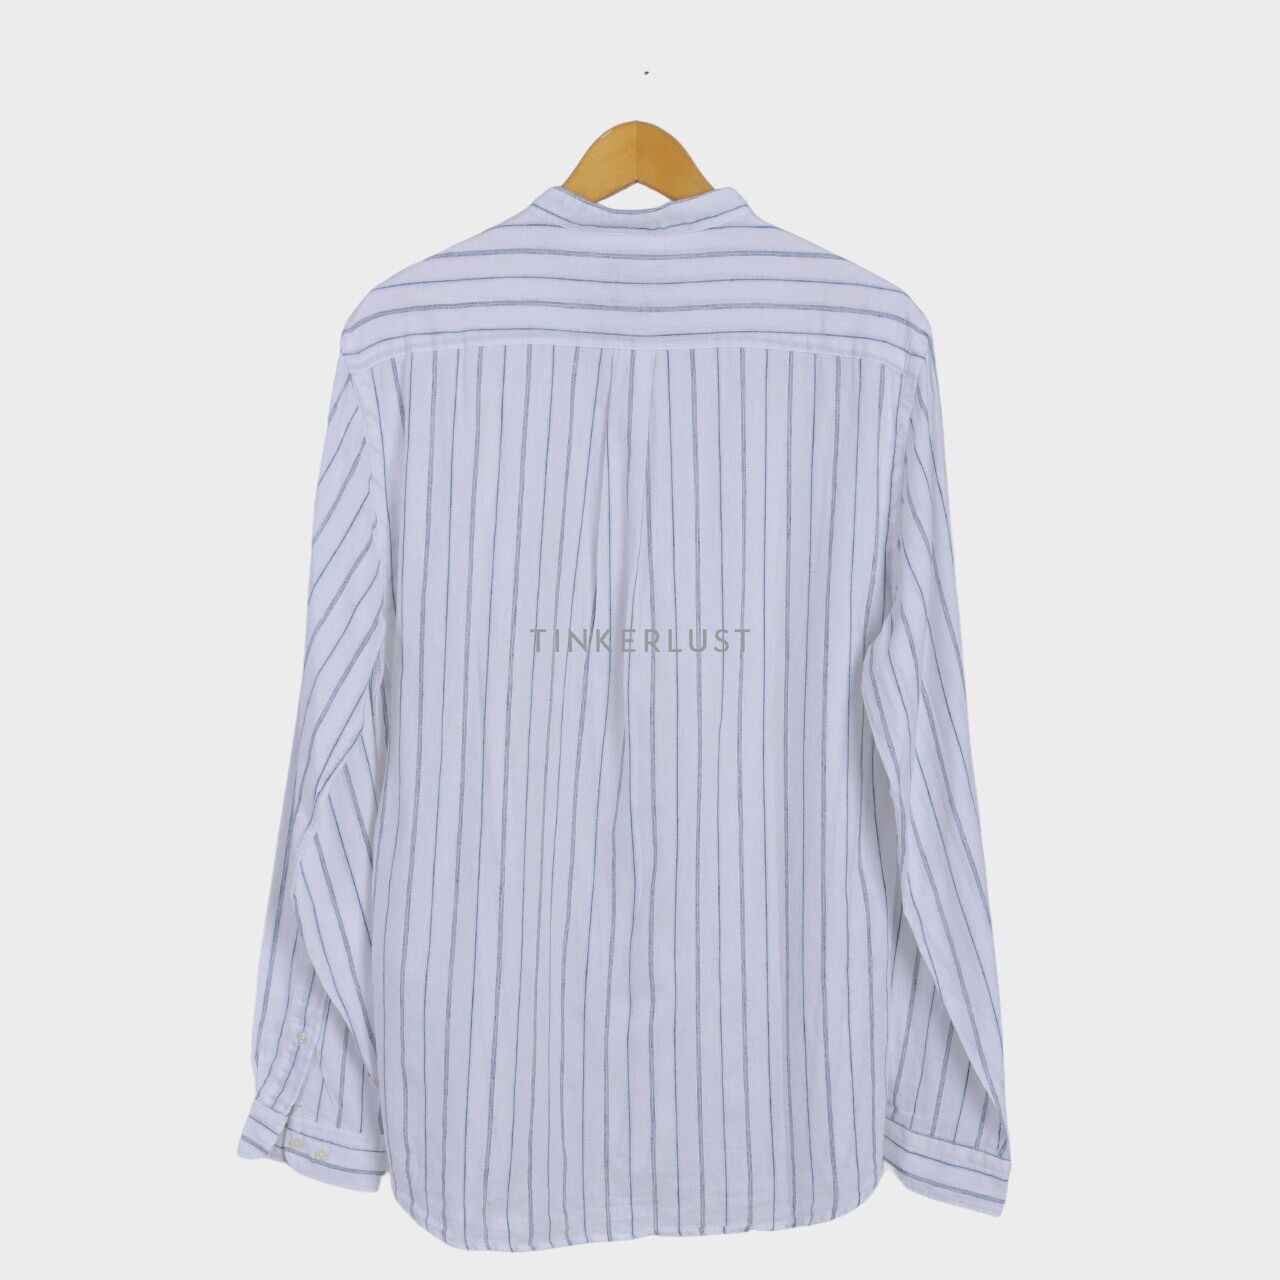 Zara White Stripes Long Sleeve Shirt